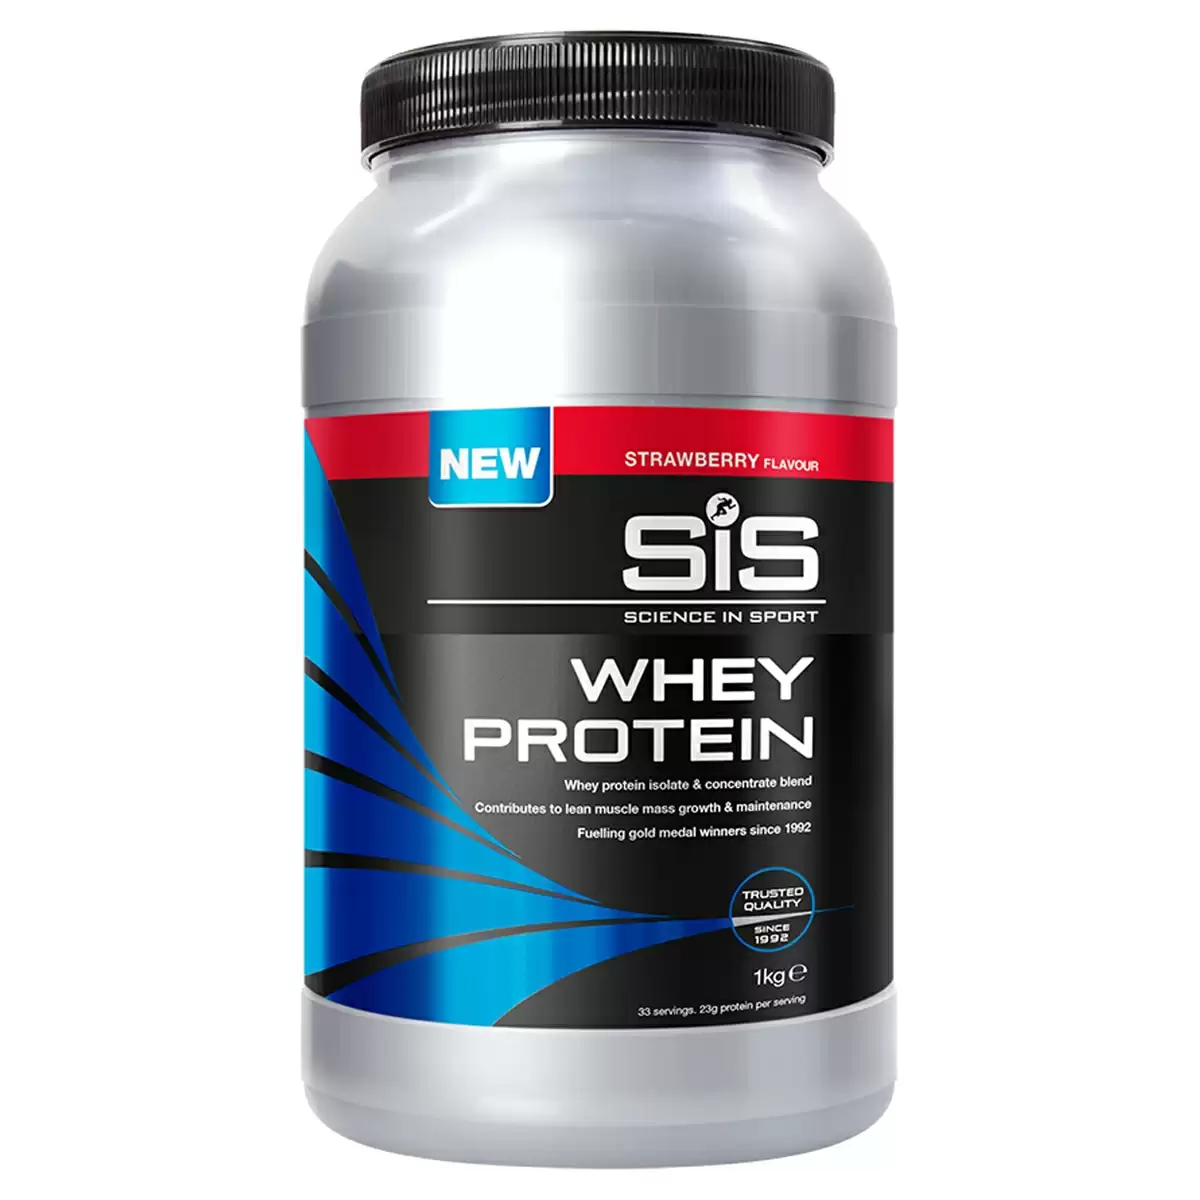 Whey Protein Powder Strawberry Flavor 1kg - image